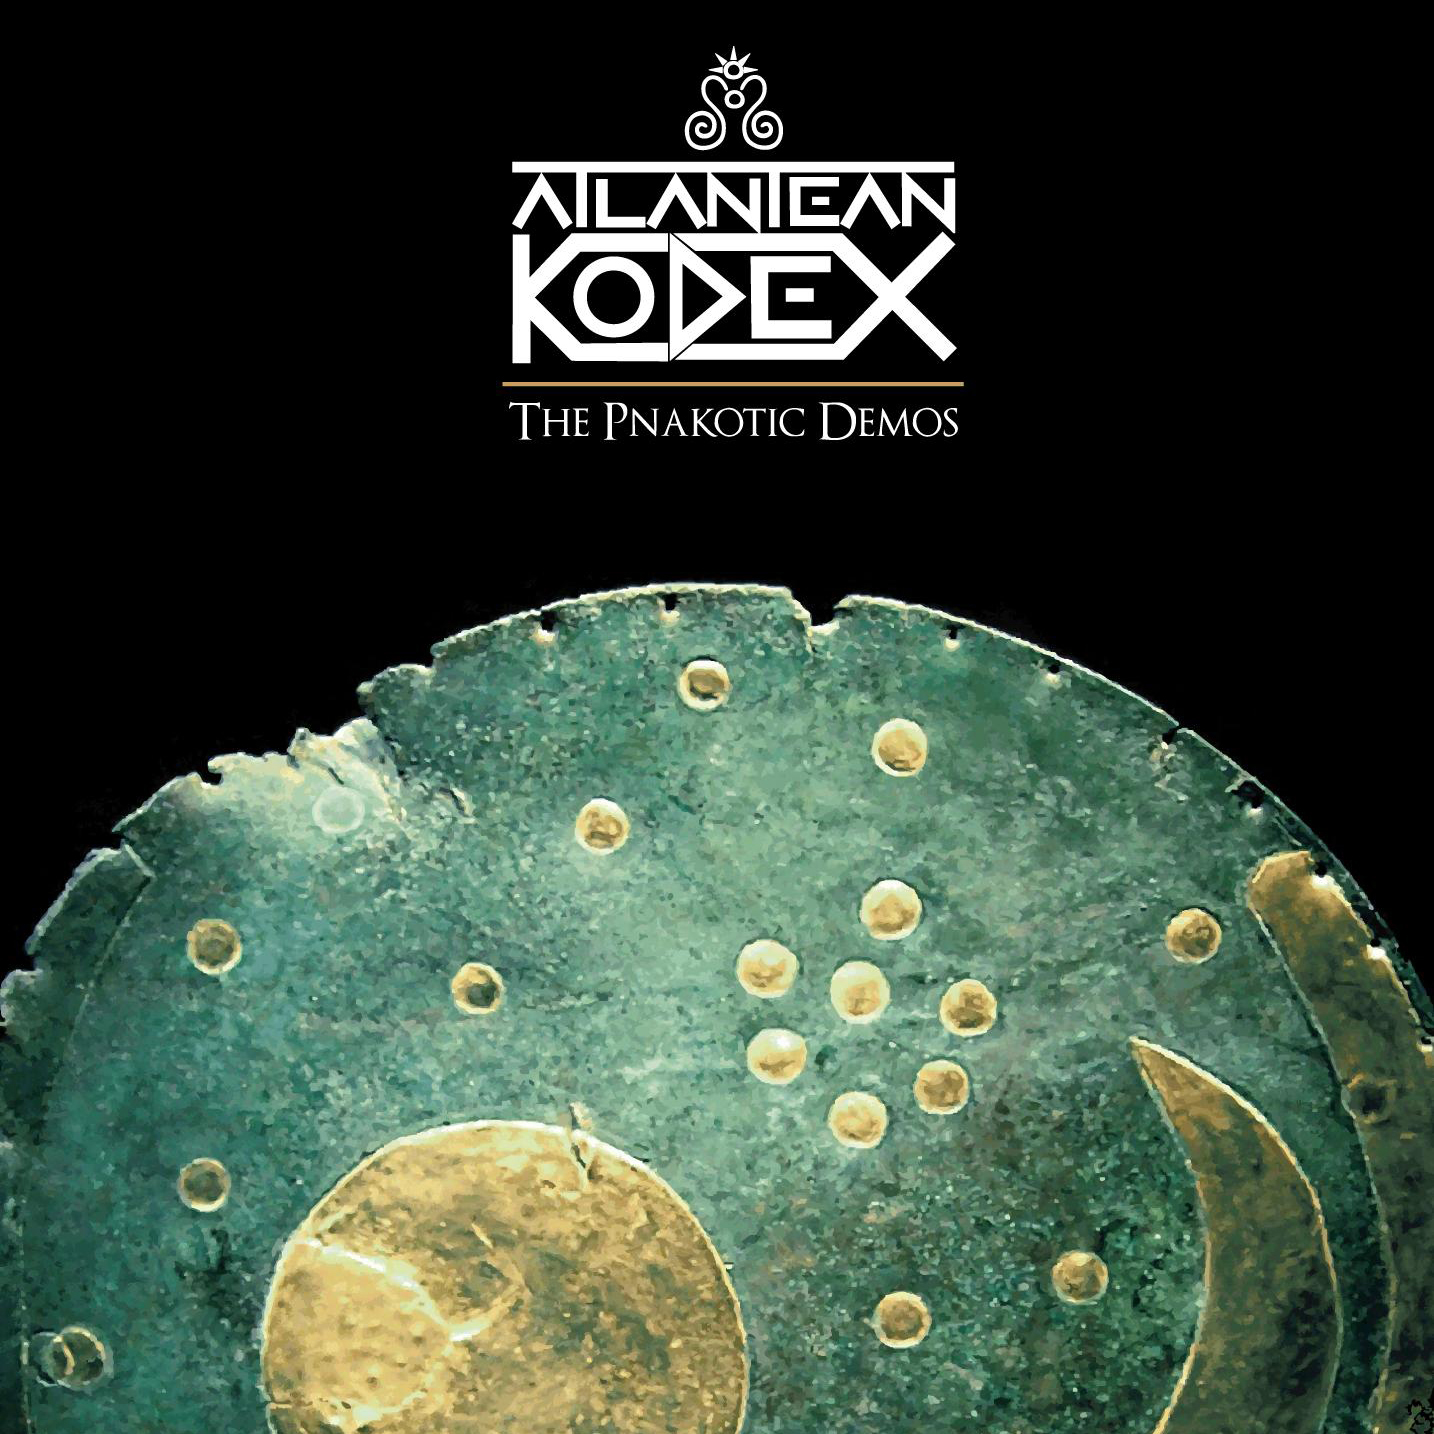 atlantean kodex the pnakotic demos